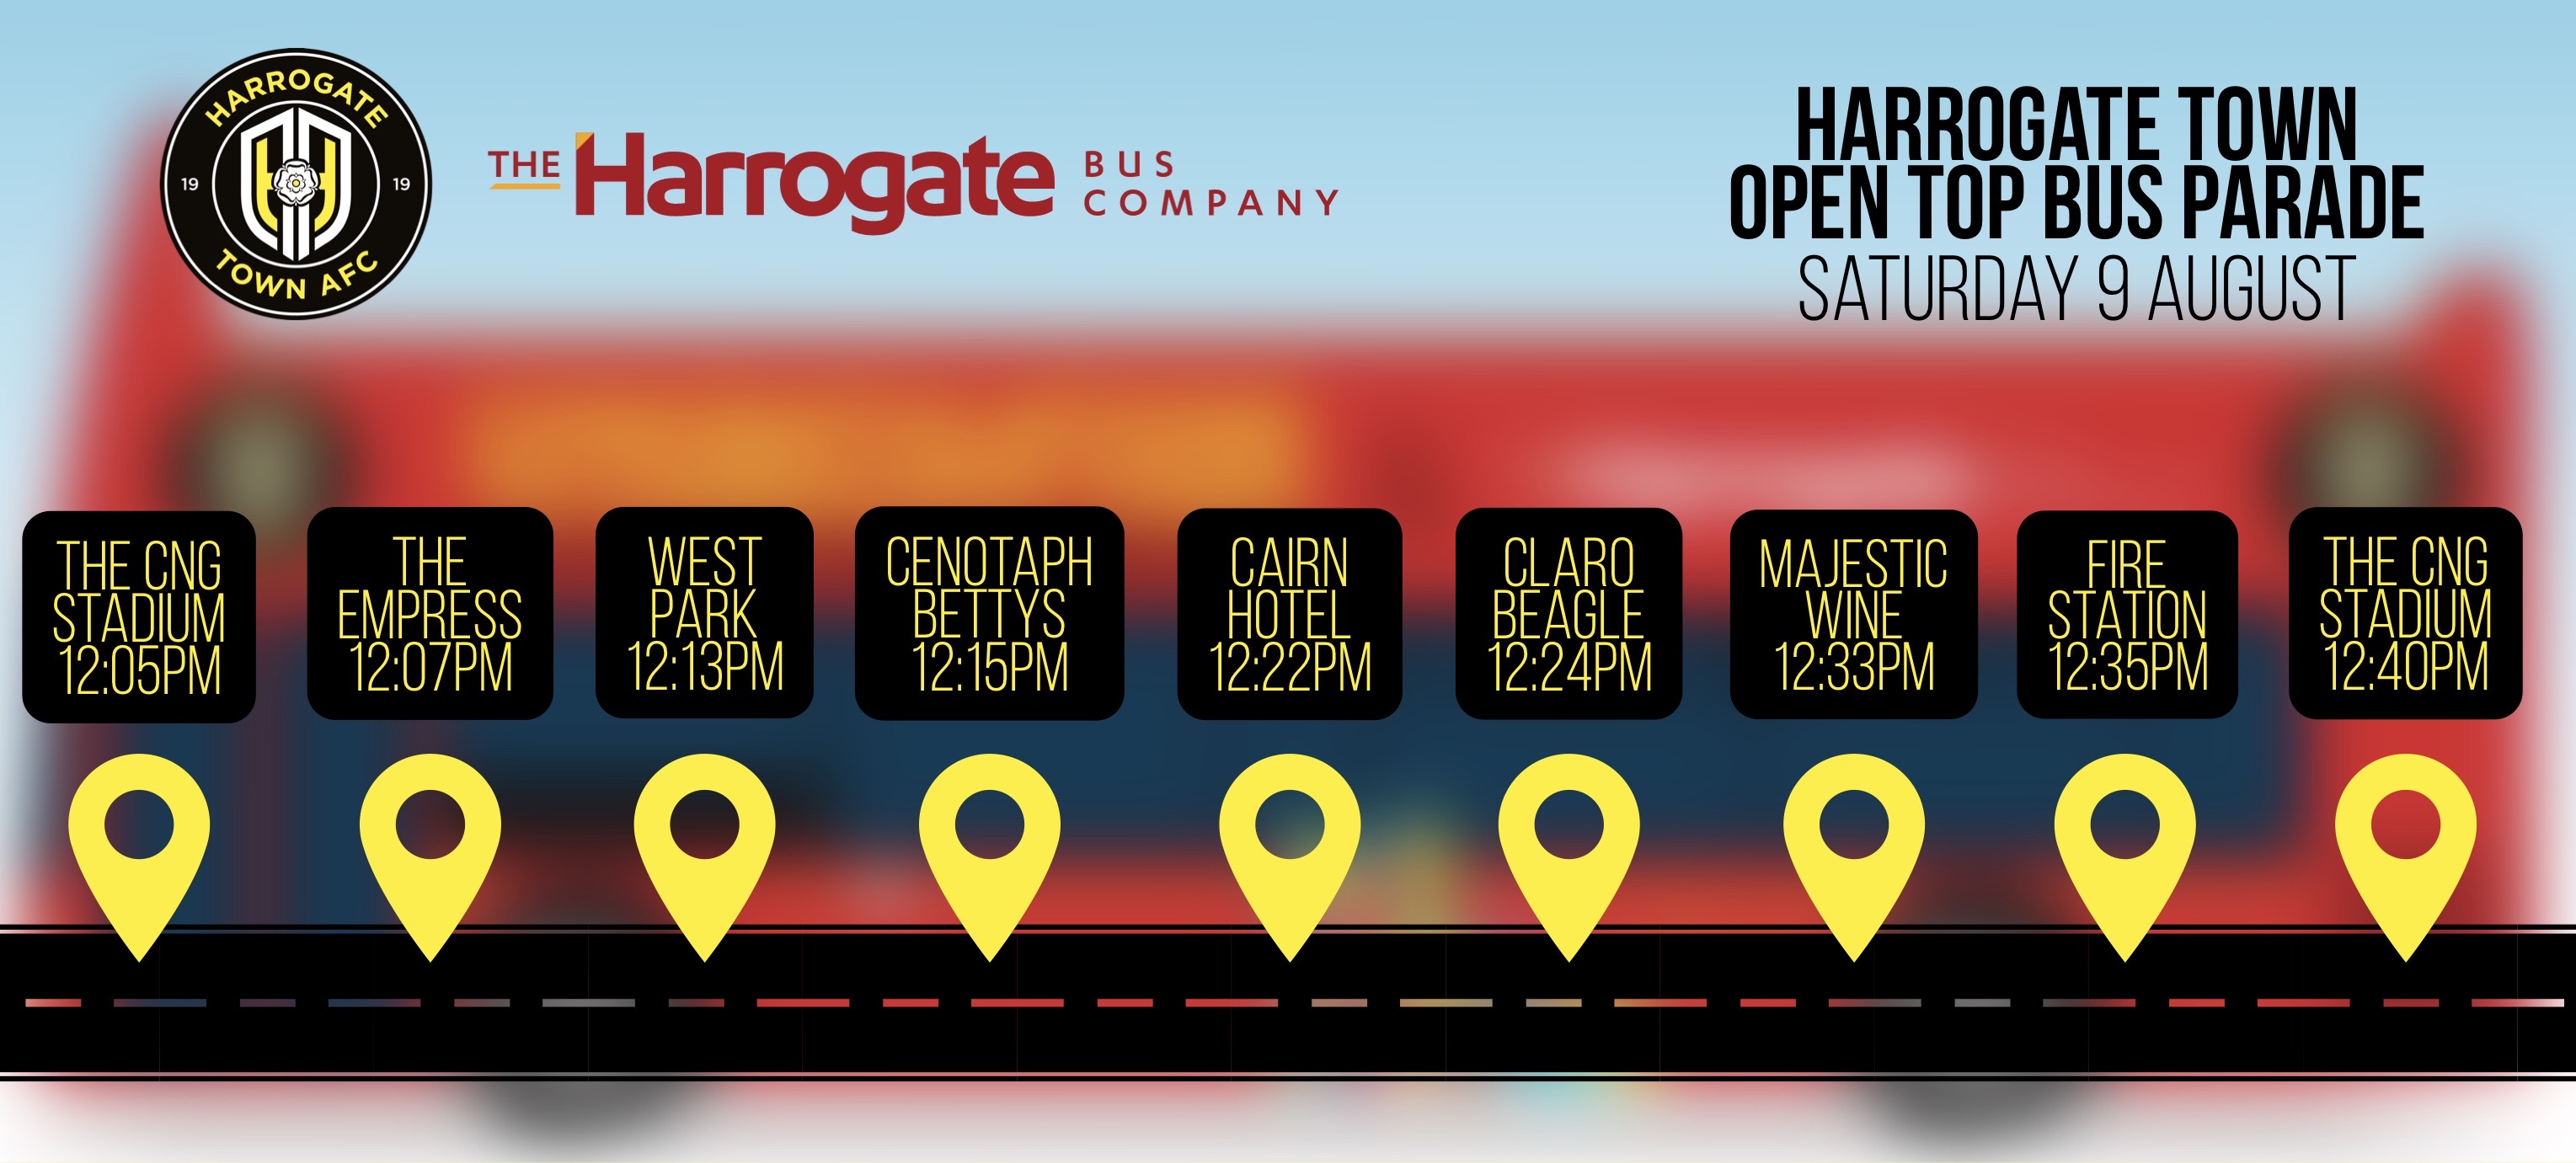 Harrogate Town open-top bus parade graphic